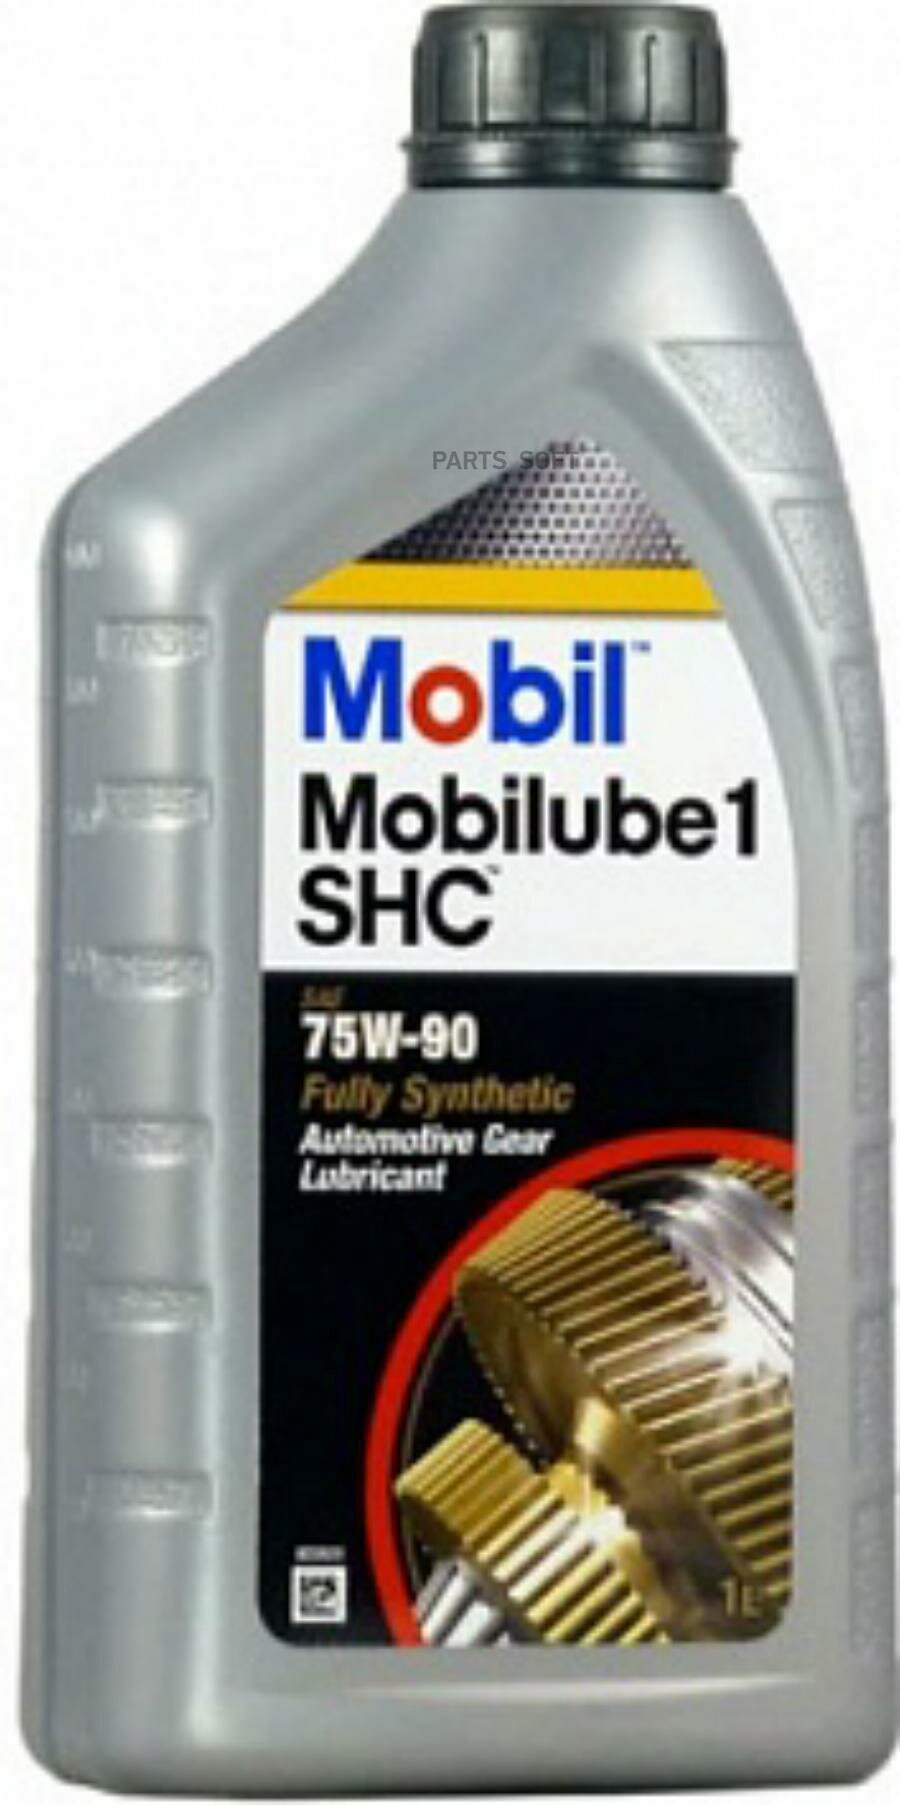 MOBIL 142123 Mobilube 1 SHC SAE 75W-90 API GL-45 1